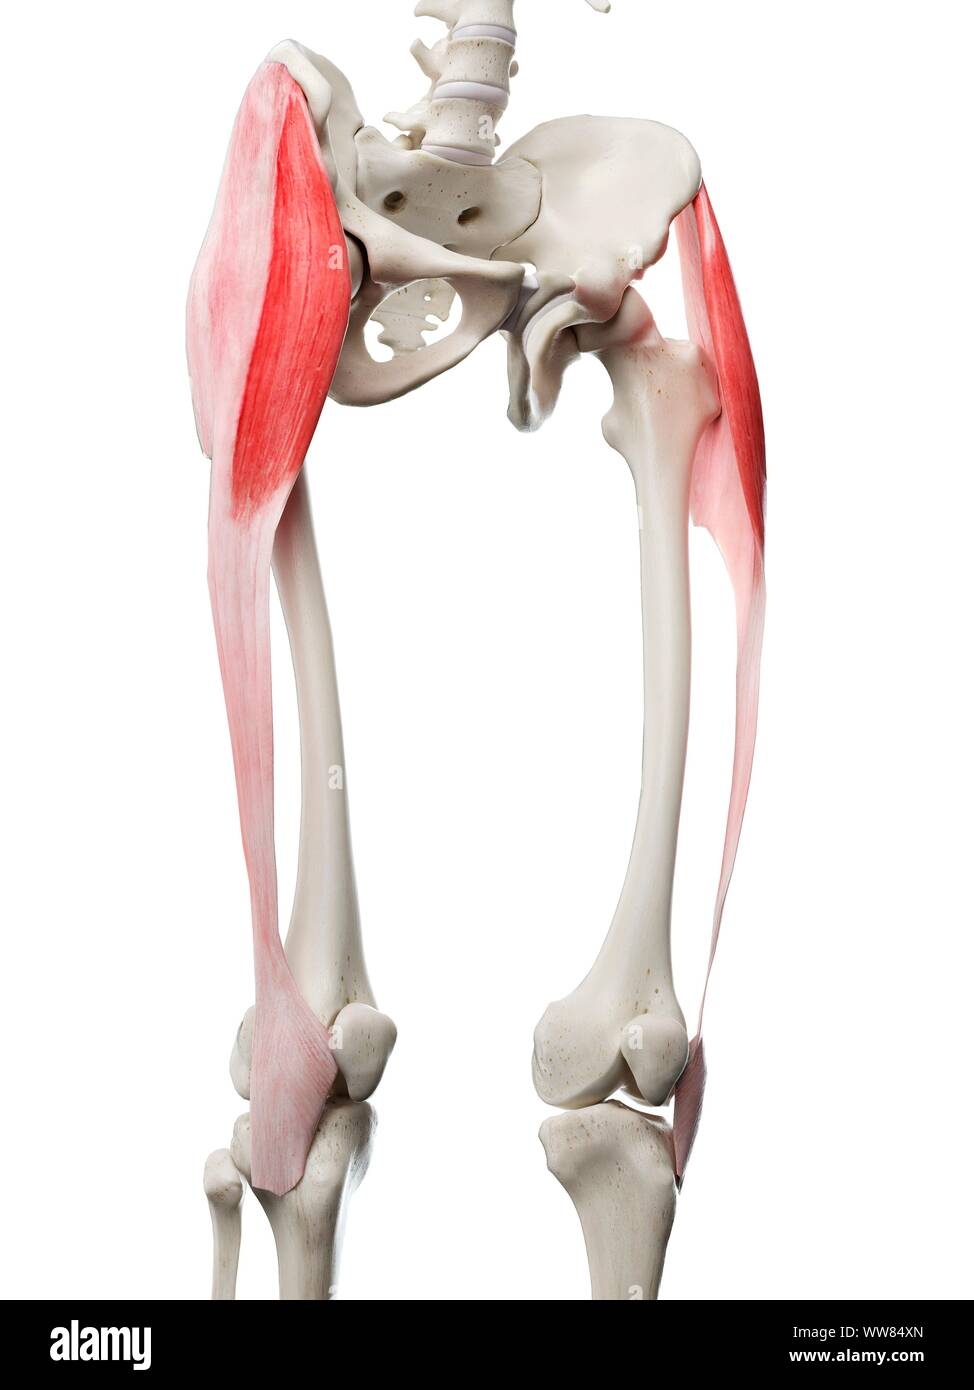 Tensor fascia lata muscle, illustration Stock Photo